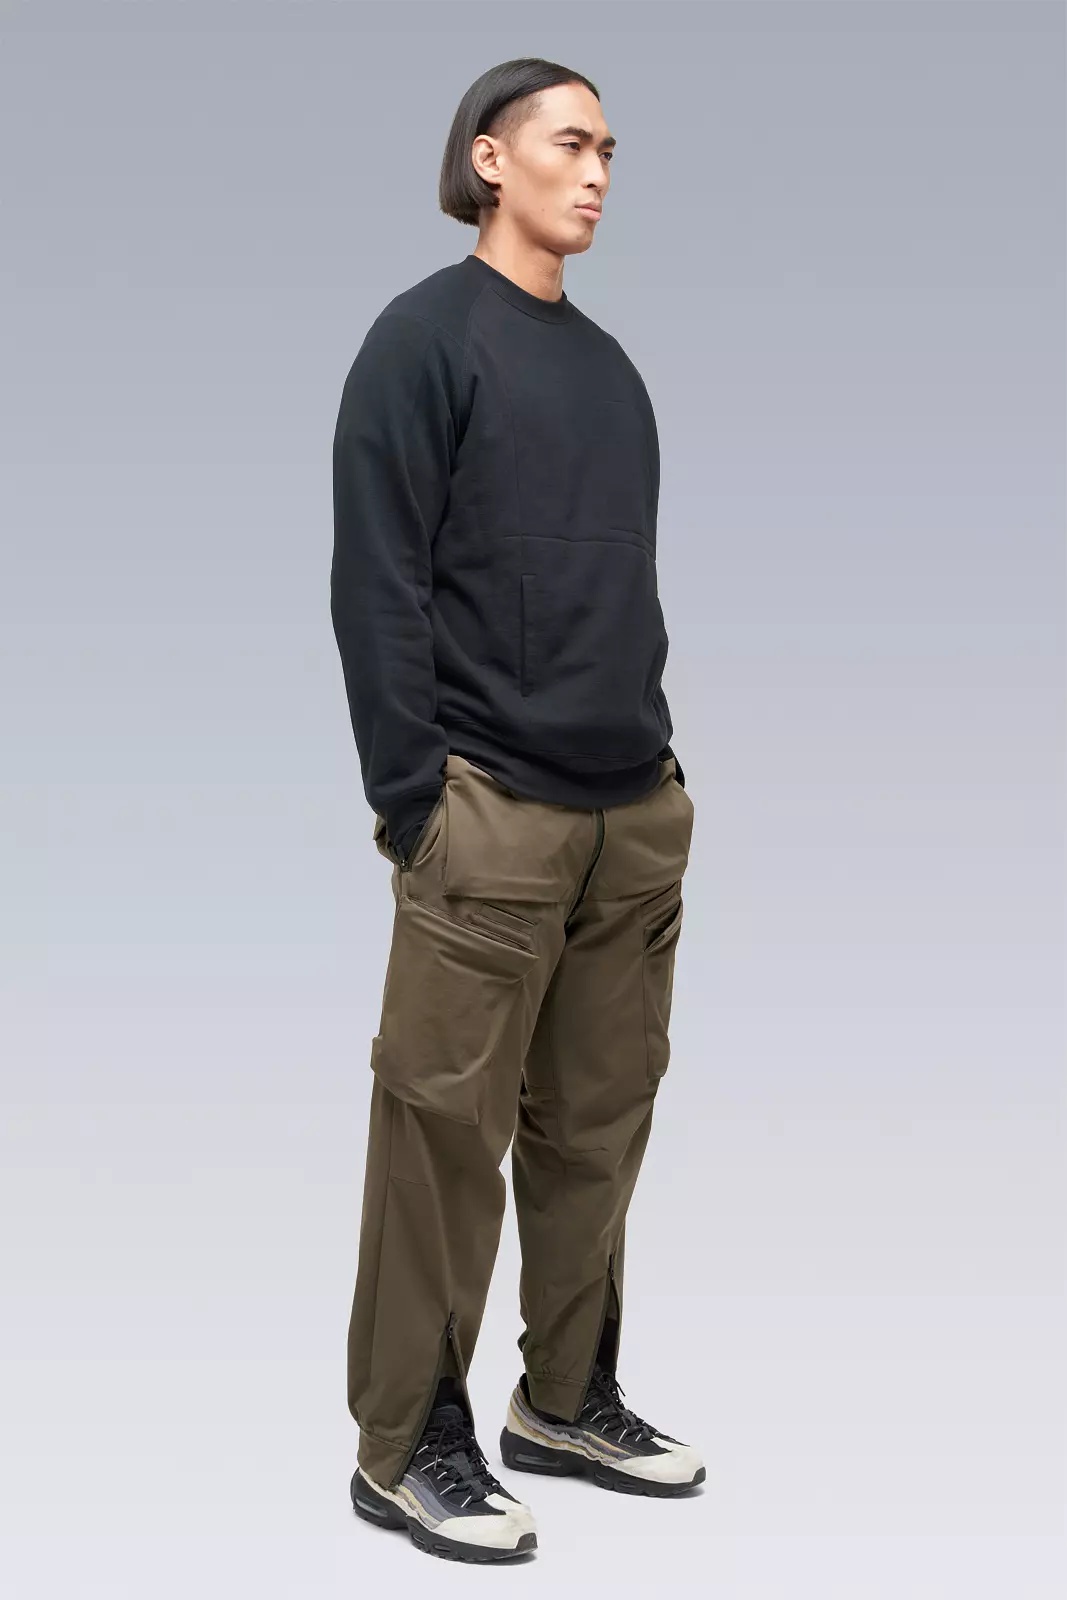 S14-BR Cotton Crewneck Sweatshirt Gray Melange - 15